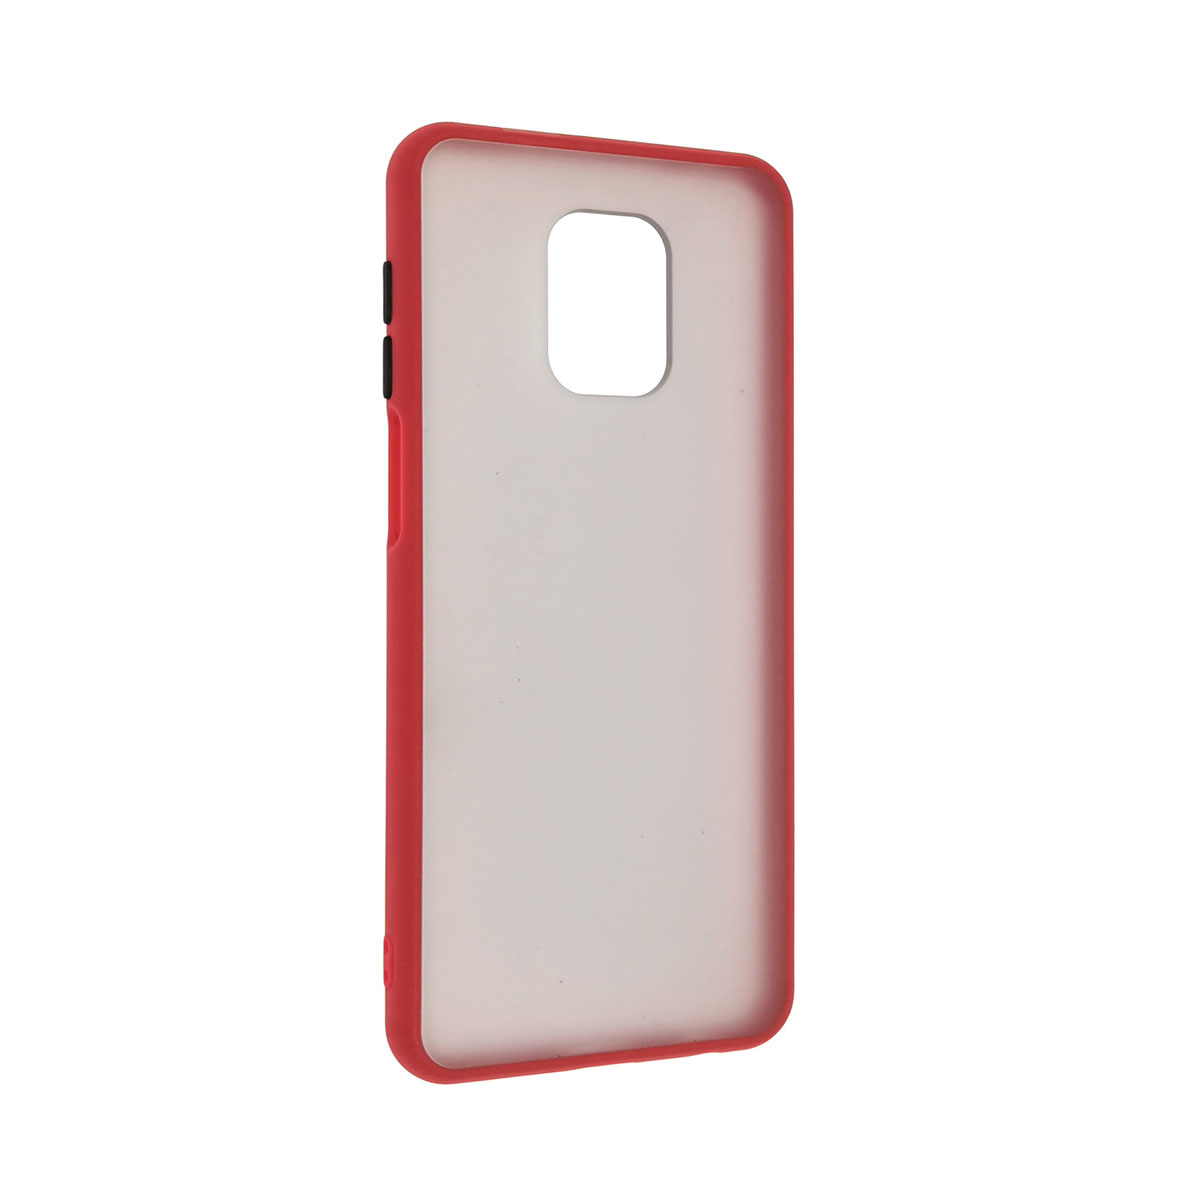 Чехол накладка SKIN SHELL для XIAOMI Redmi Note 9 Pro, Redmi Note 9S, силикон, пластик, цвет окантовки красный